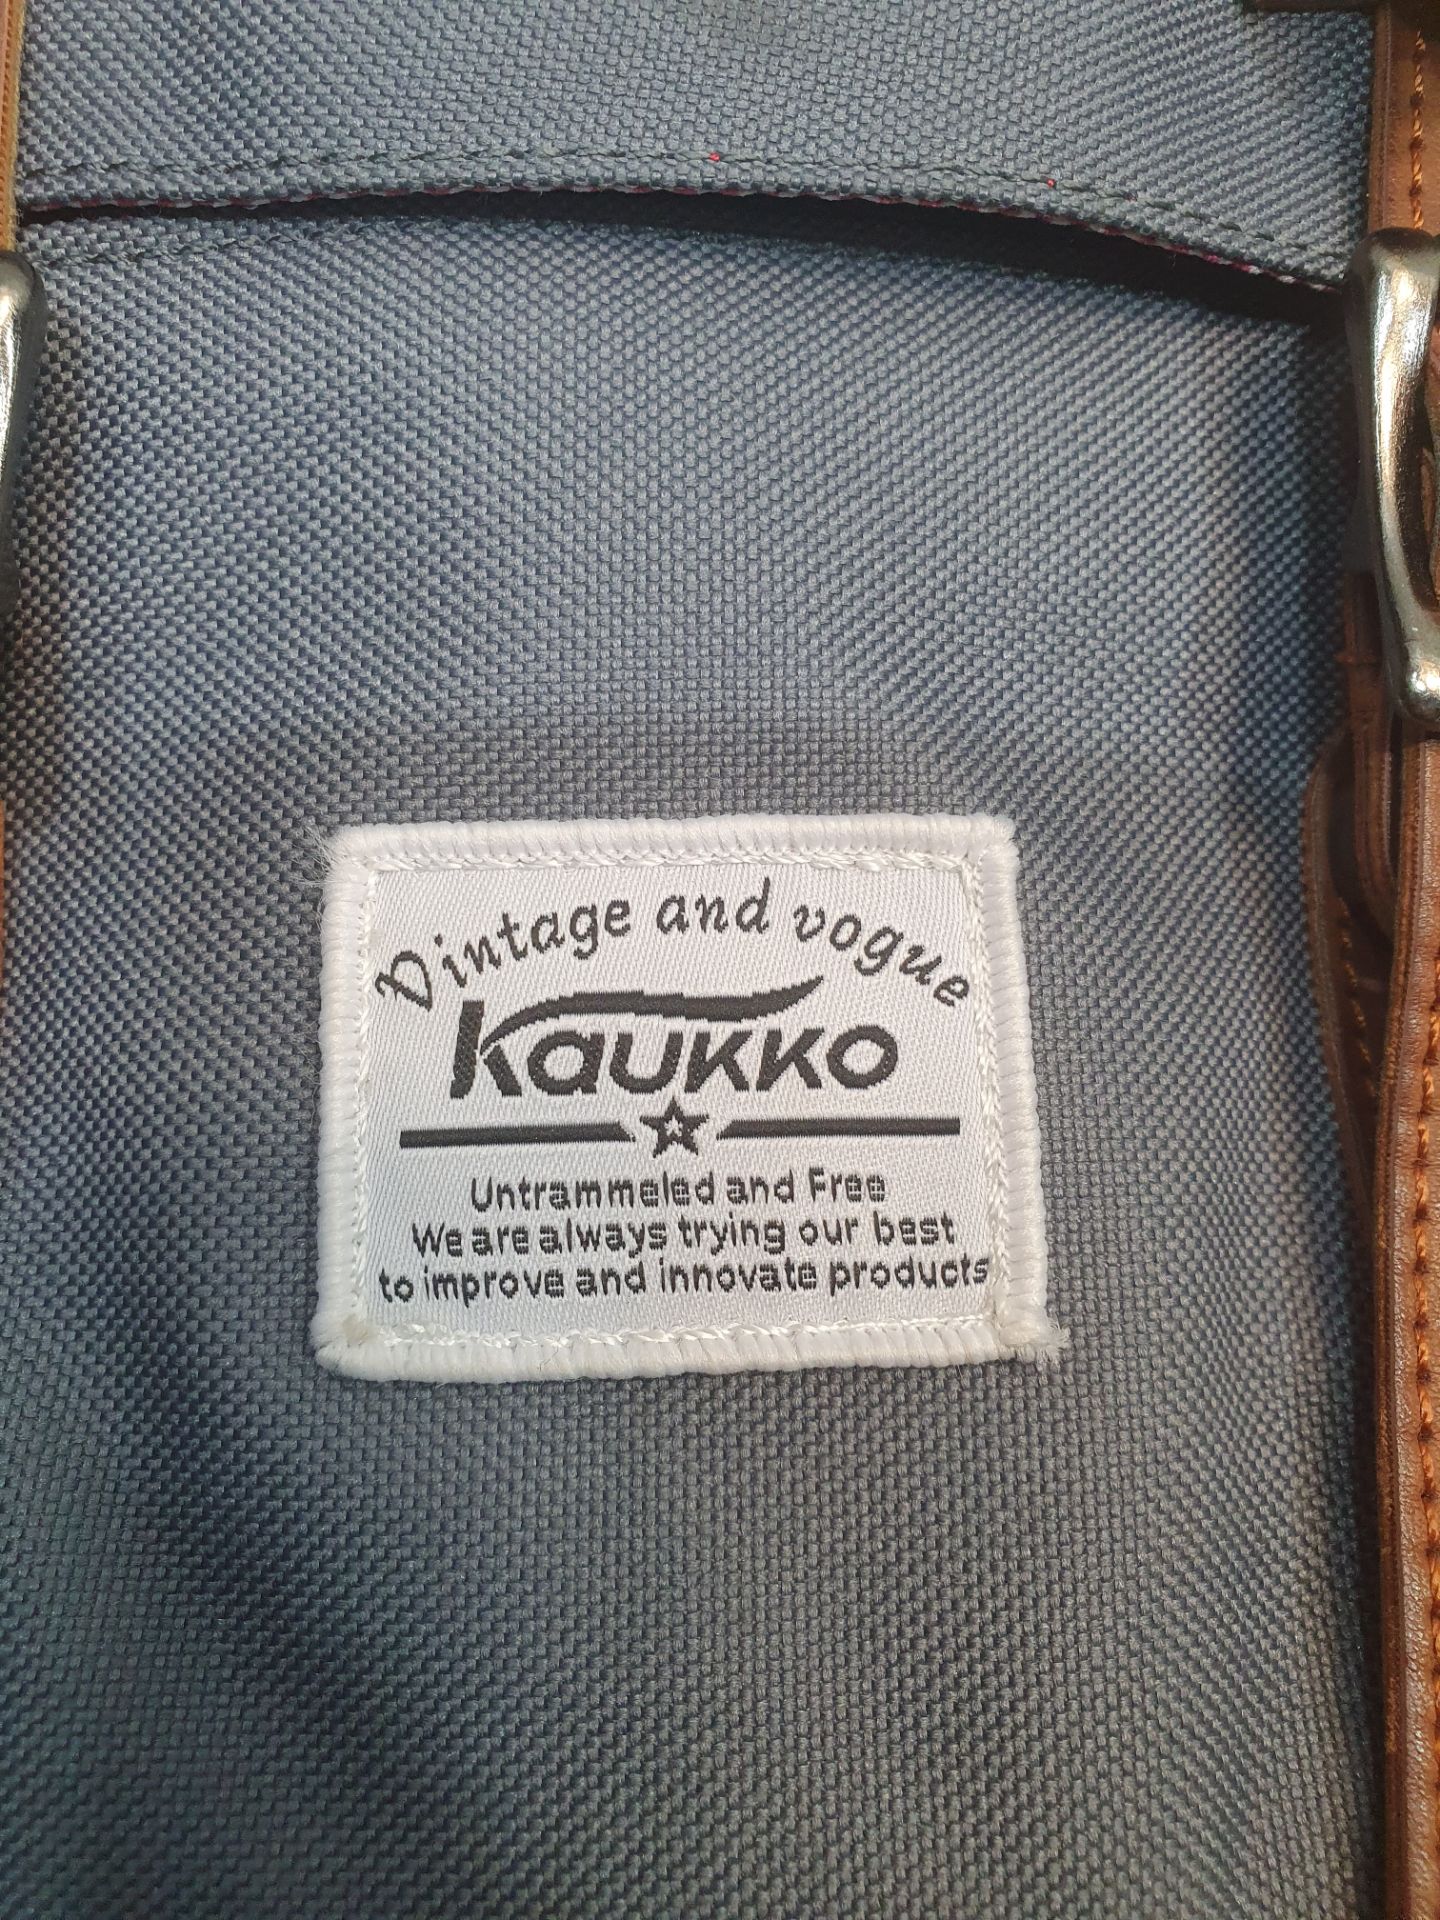 Kaukko Vintage and Vogue School Backpack - Image 3 of 3